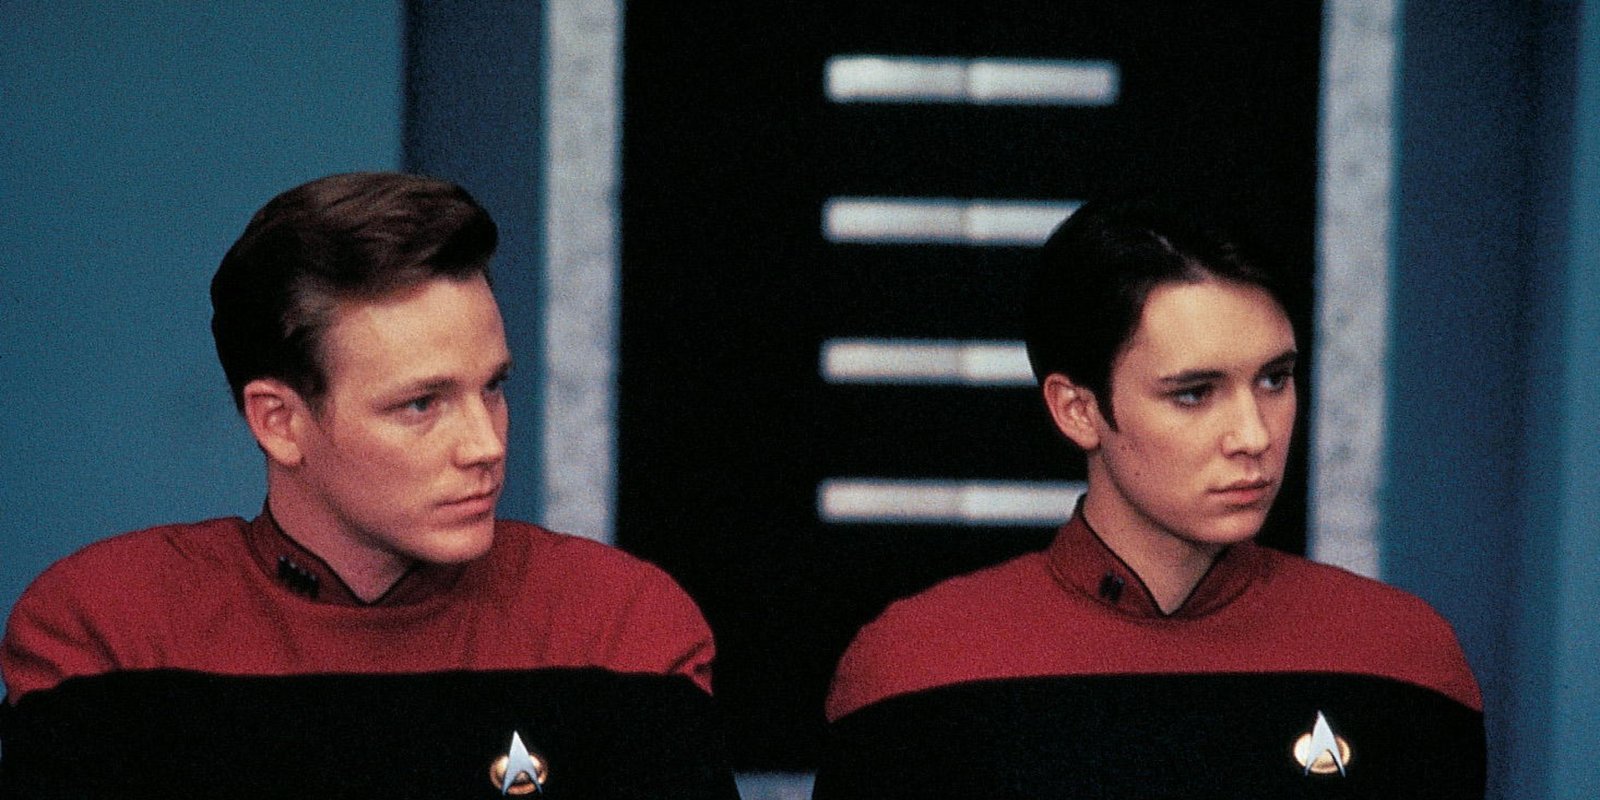 Star Trek - The Next Generation - Staffel 5